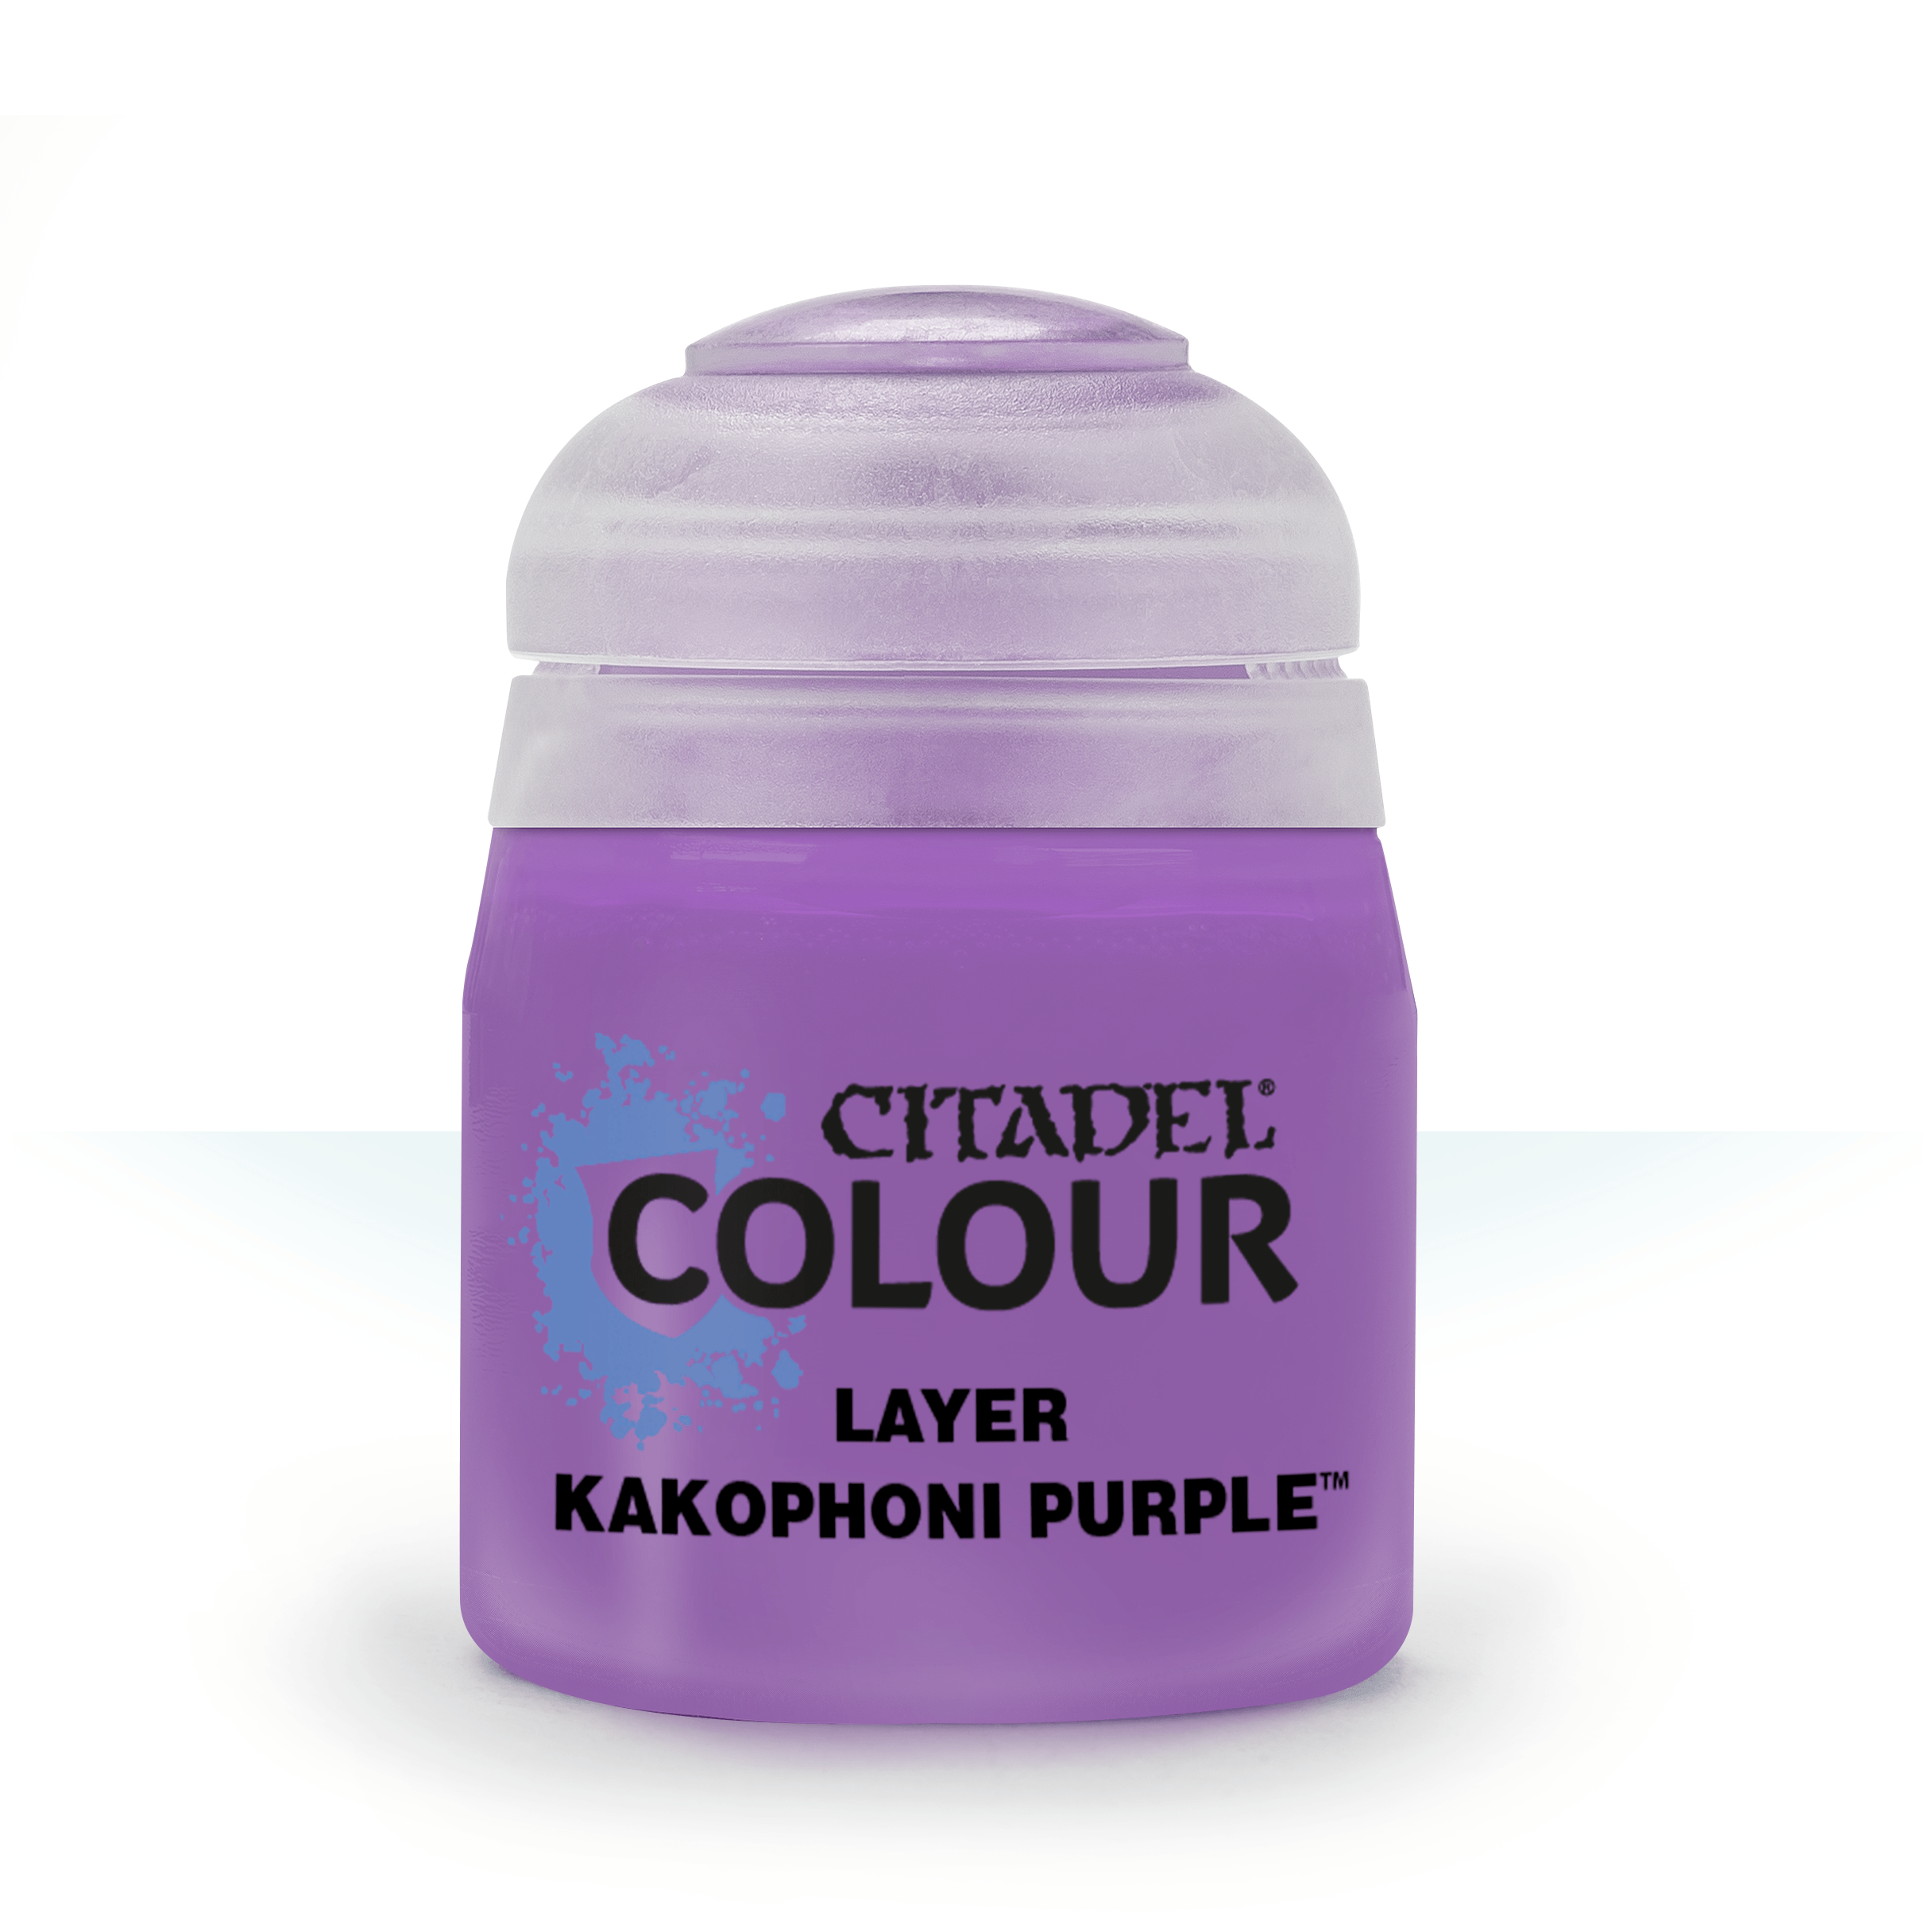 Kakophoni Purple - Citadel Layer Colour